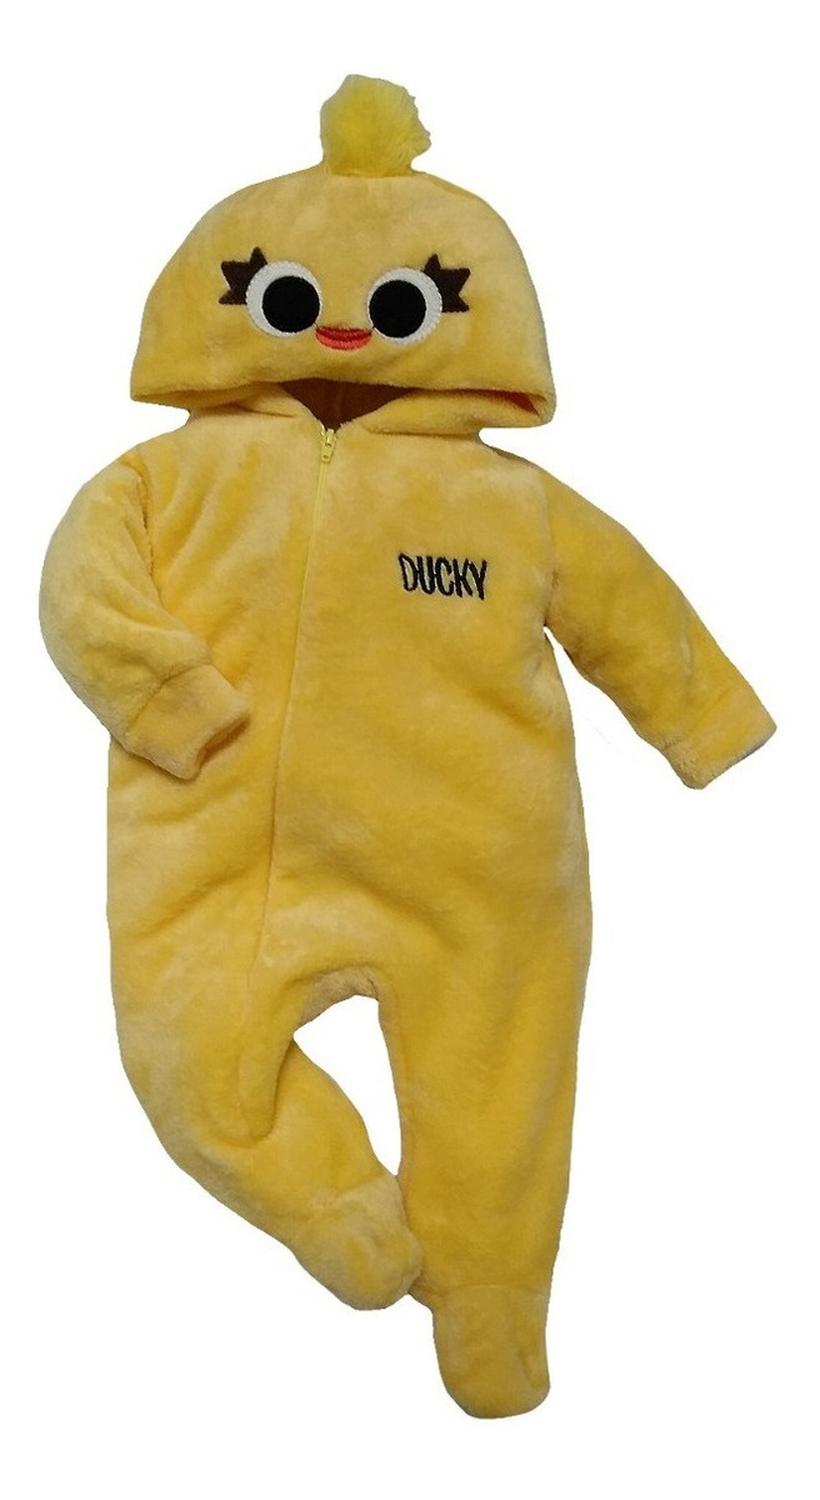 Kit 3 Mamelucos Disney para Bebé con Gorro Bordado Toy Story Bunny, Ducky, Woody